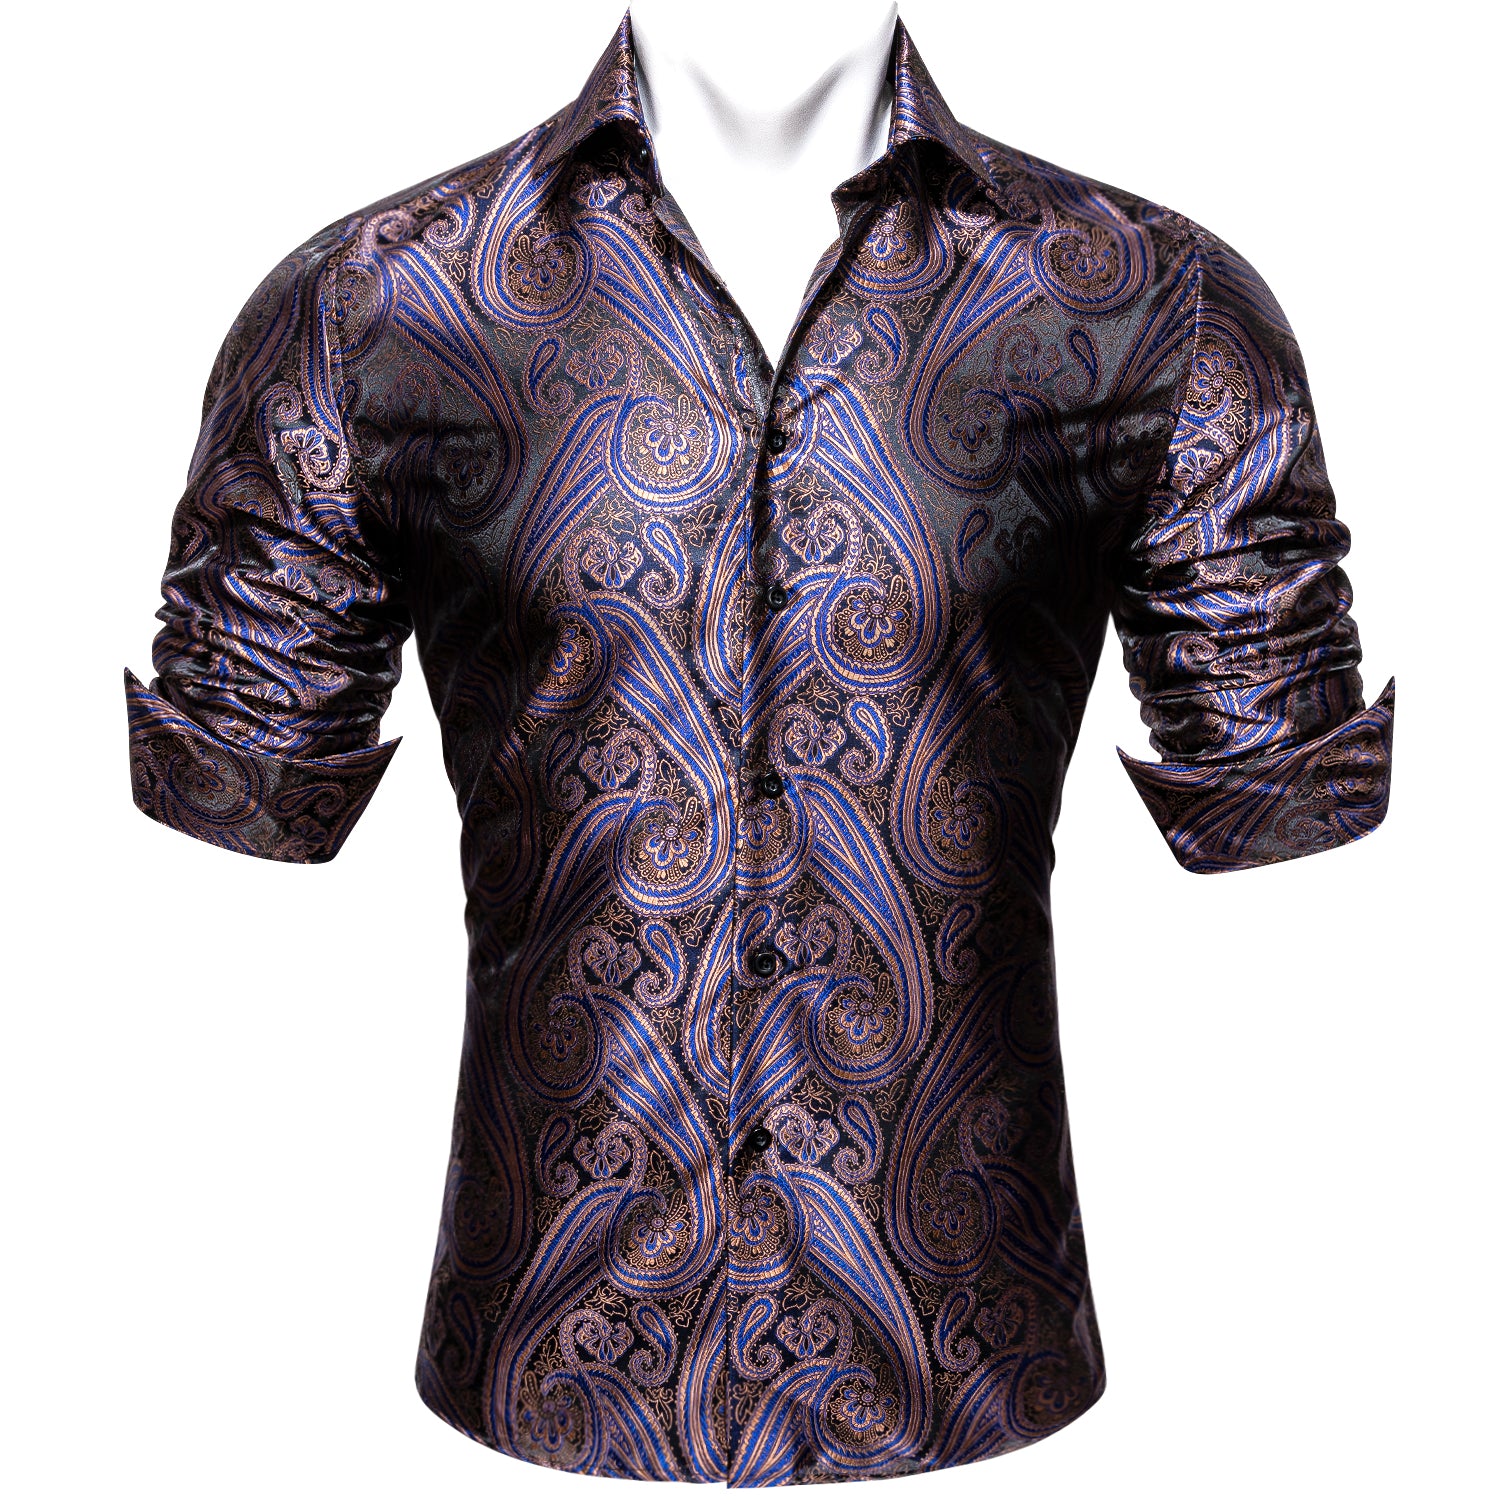 Barry.wang Purple Blue Silk Paisley Tribal Long Sleeve Daily Slim Fit Men's Shirt